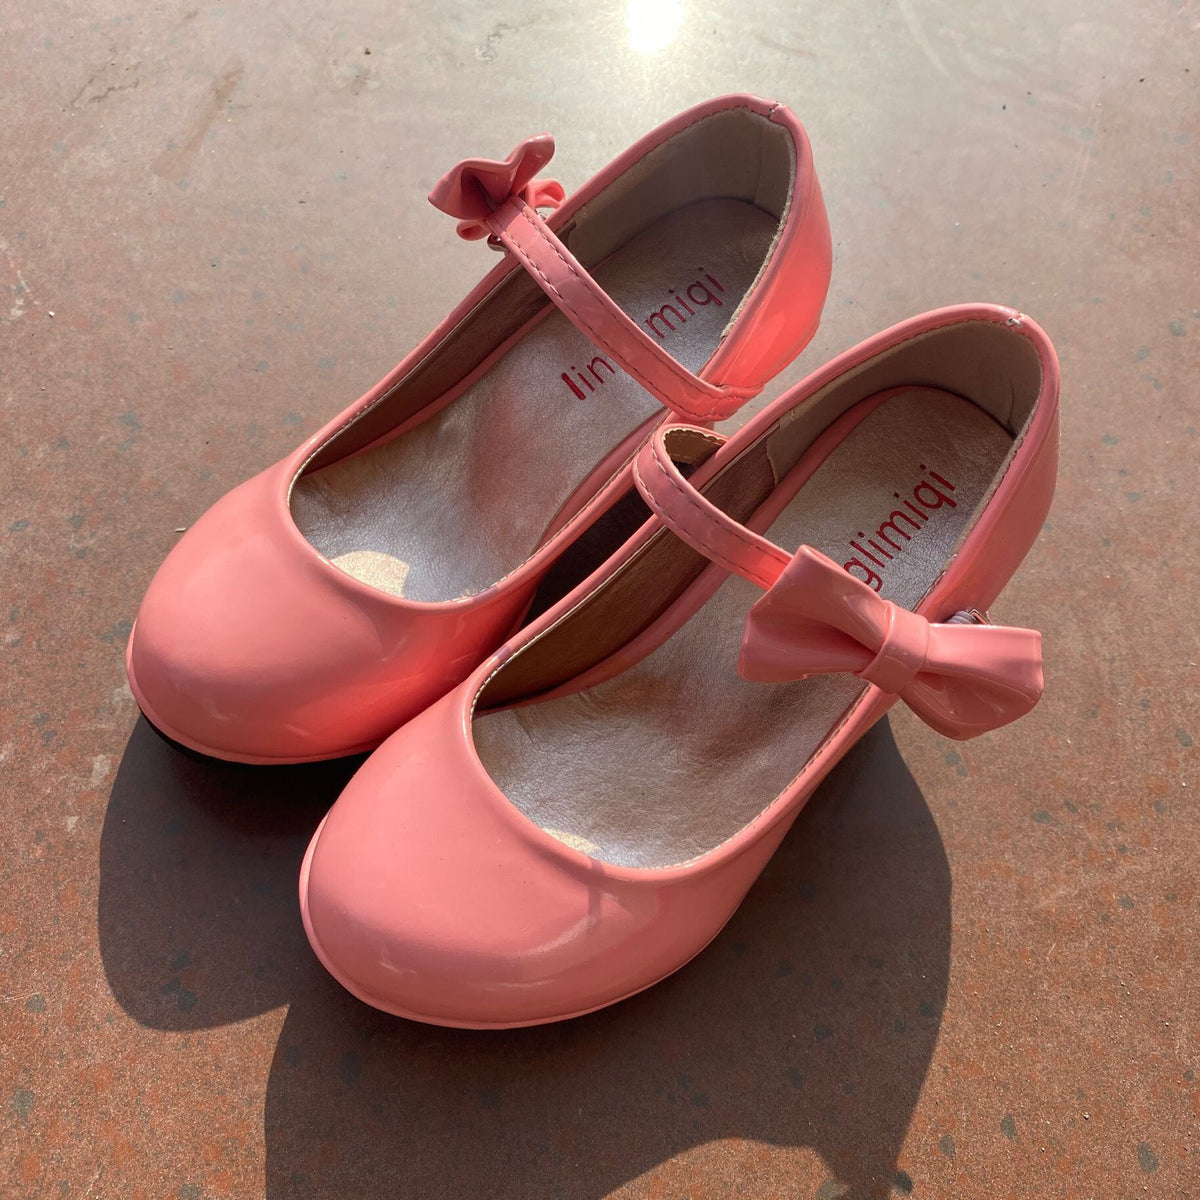 Bekamille Girls Leather Shoes Autumn Bowtie Sandals New Children Shoes High Heels Princess Sweet Sandals For Girls SZ107